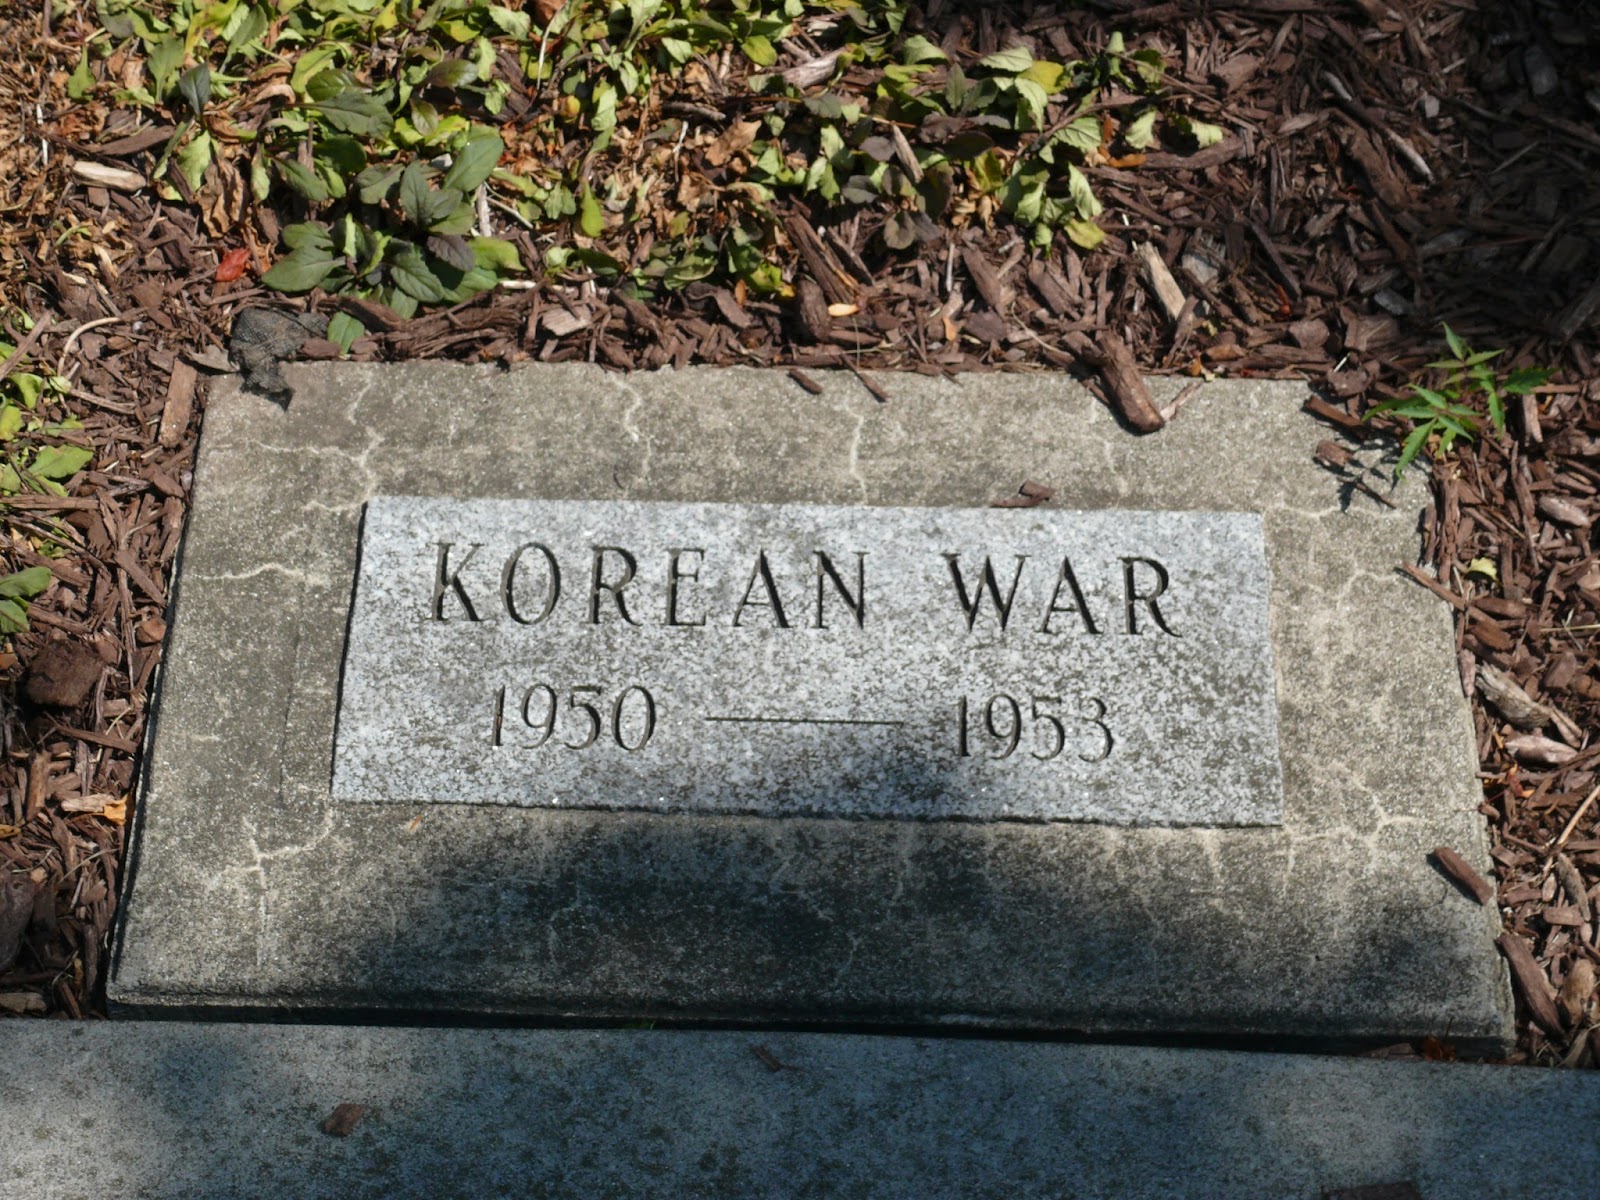 Korean War stone